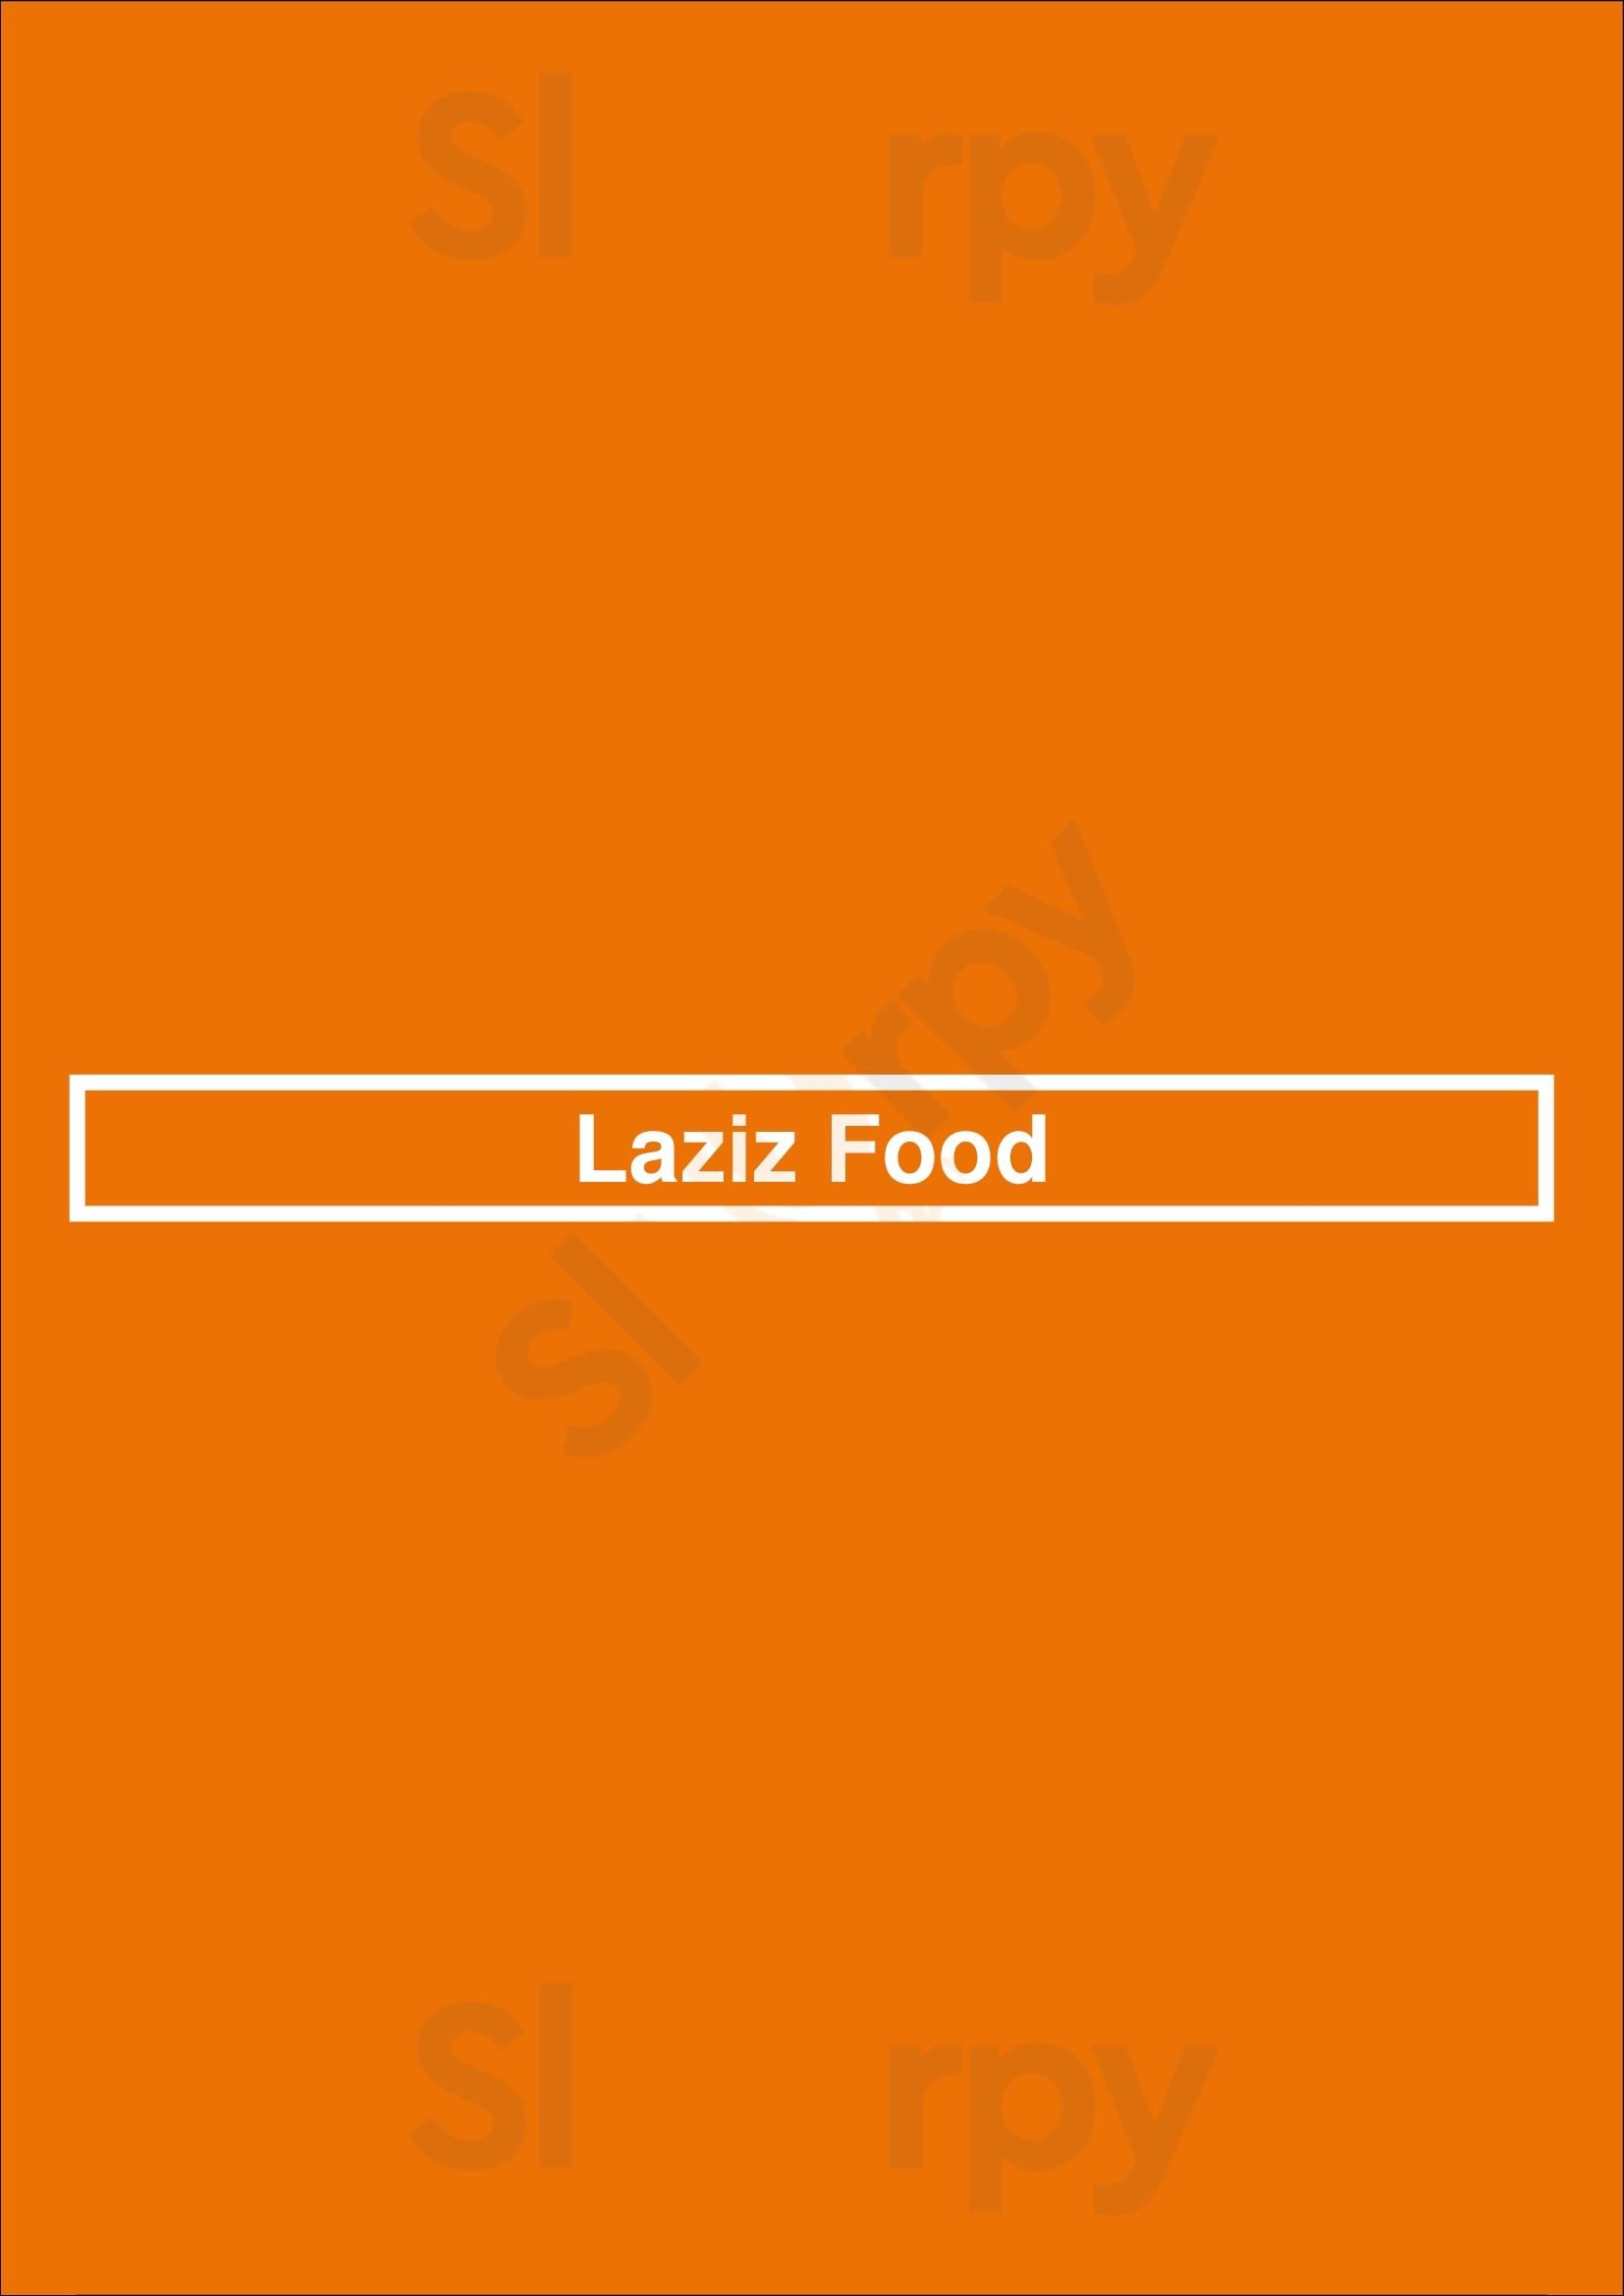 Laziz Food Roosendaal Menu - 1